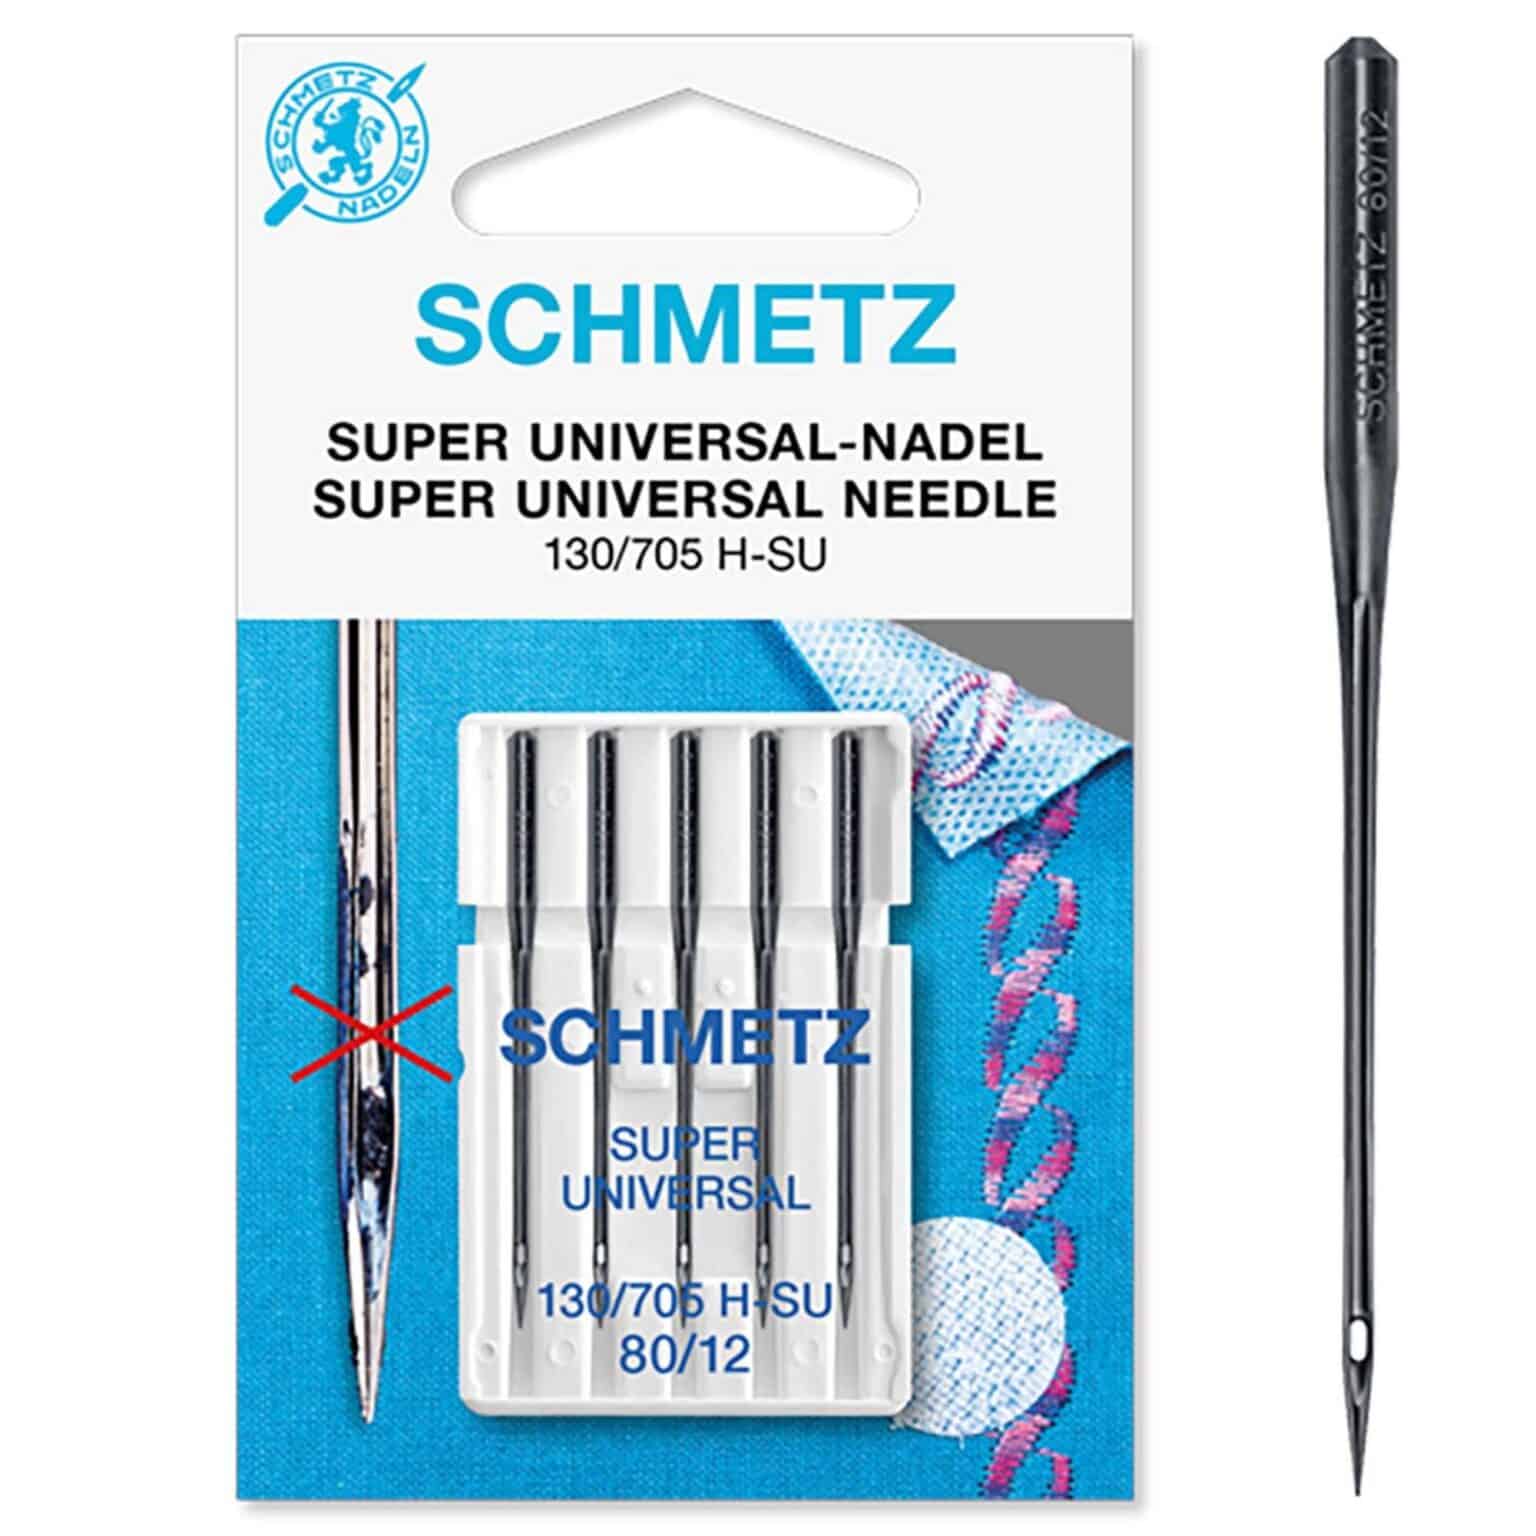 Schmetz Super Universal Sewing Machine Needles, Size 80/12 | Super Stretch Needles | More Sewing